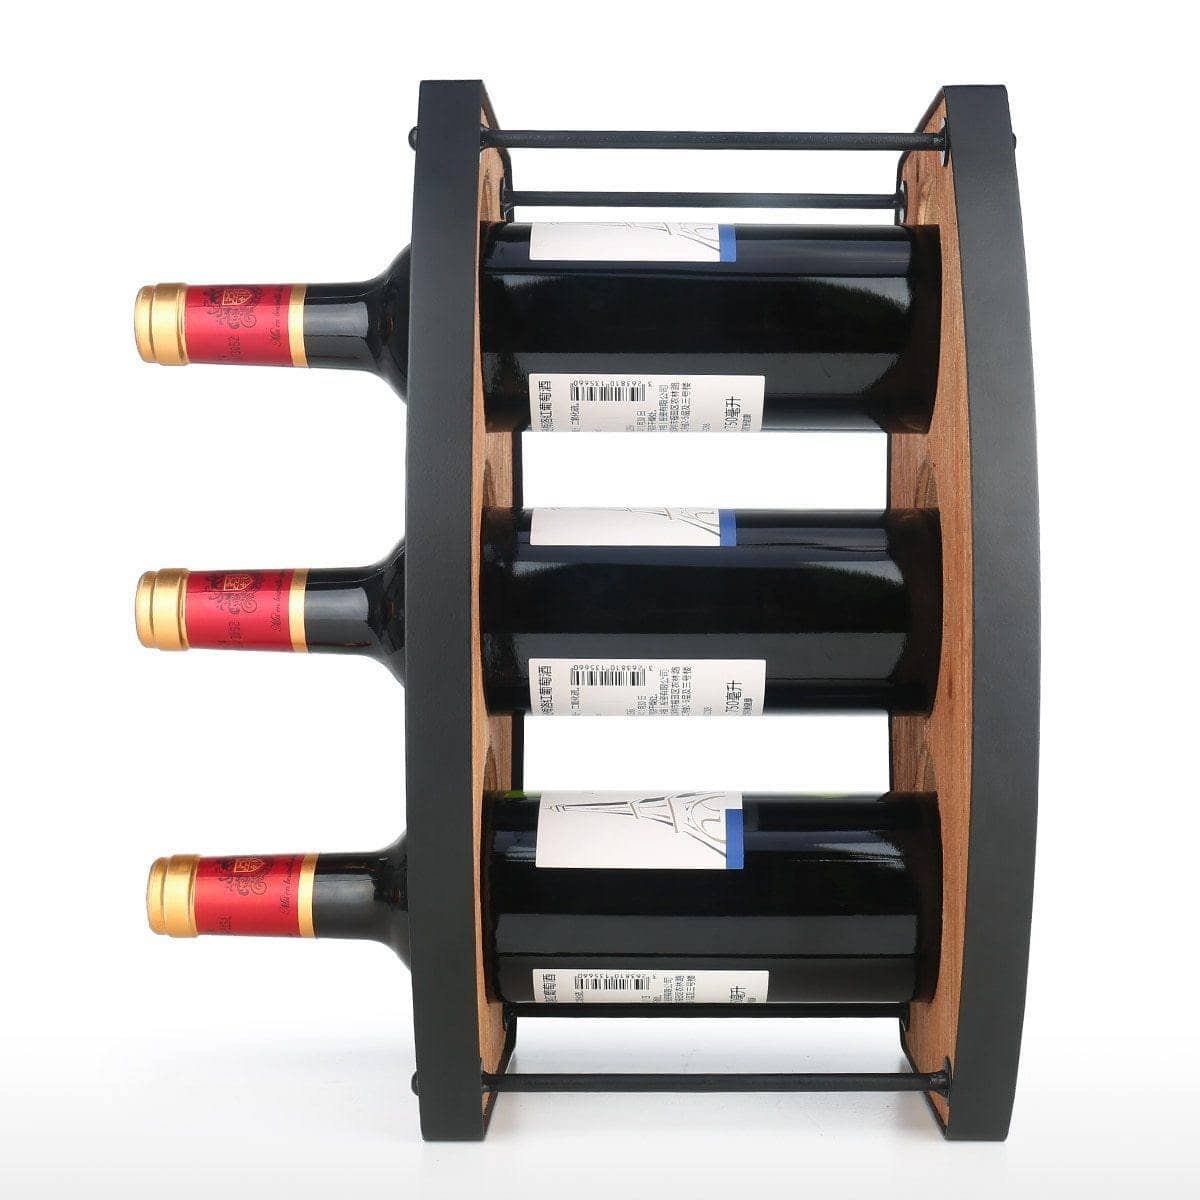 Display Your Winesin Style with Antique Finish 3 Bottles Tabletop Wine Holder Rack - Vintage & Elegant